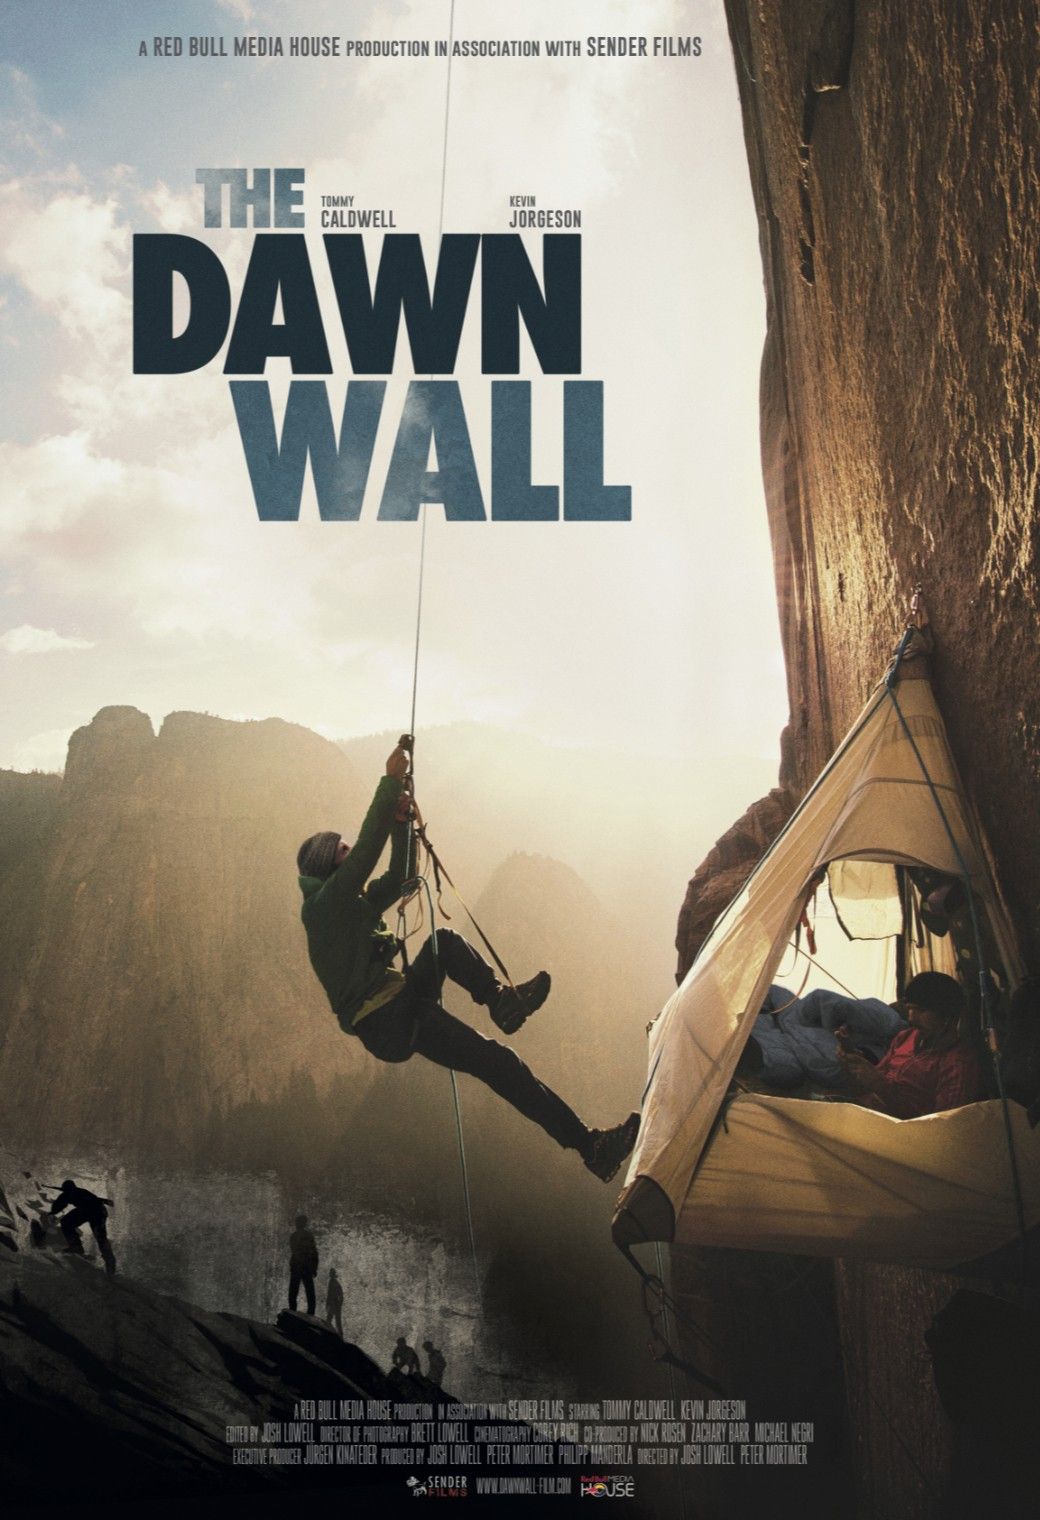 THE DAWN WALL (15)